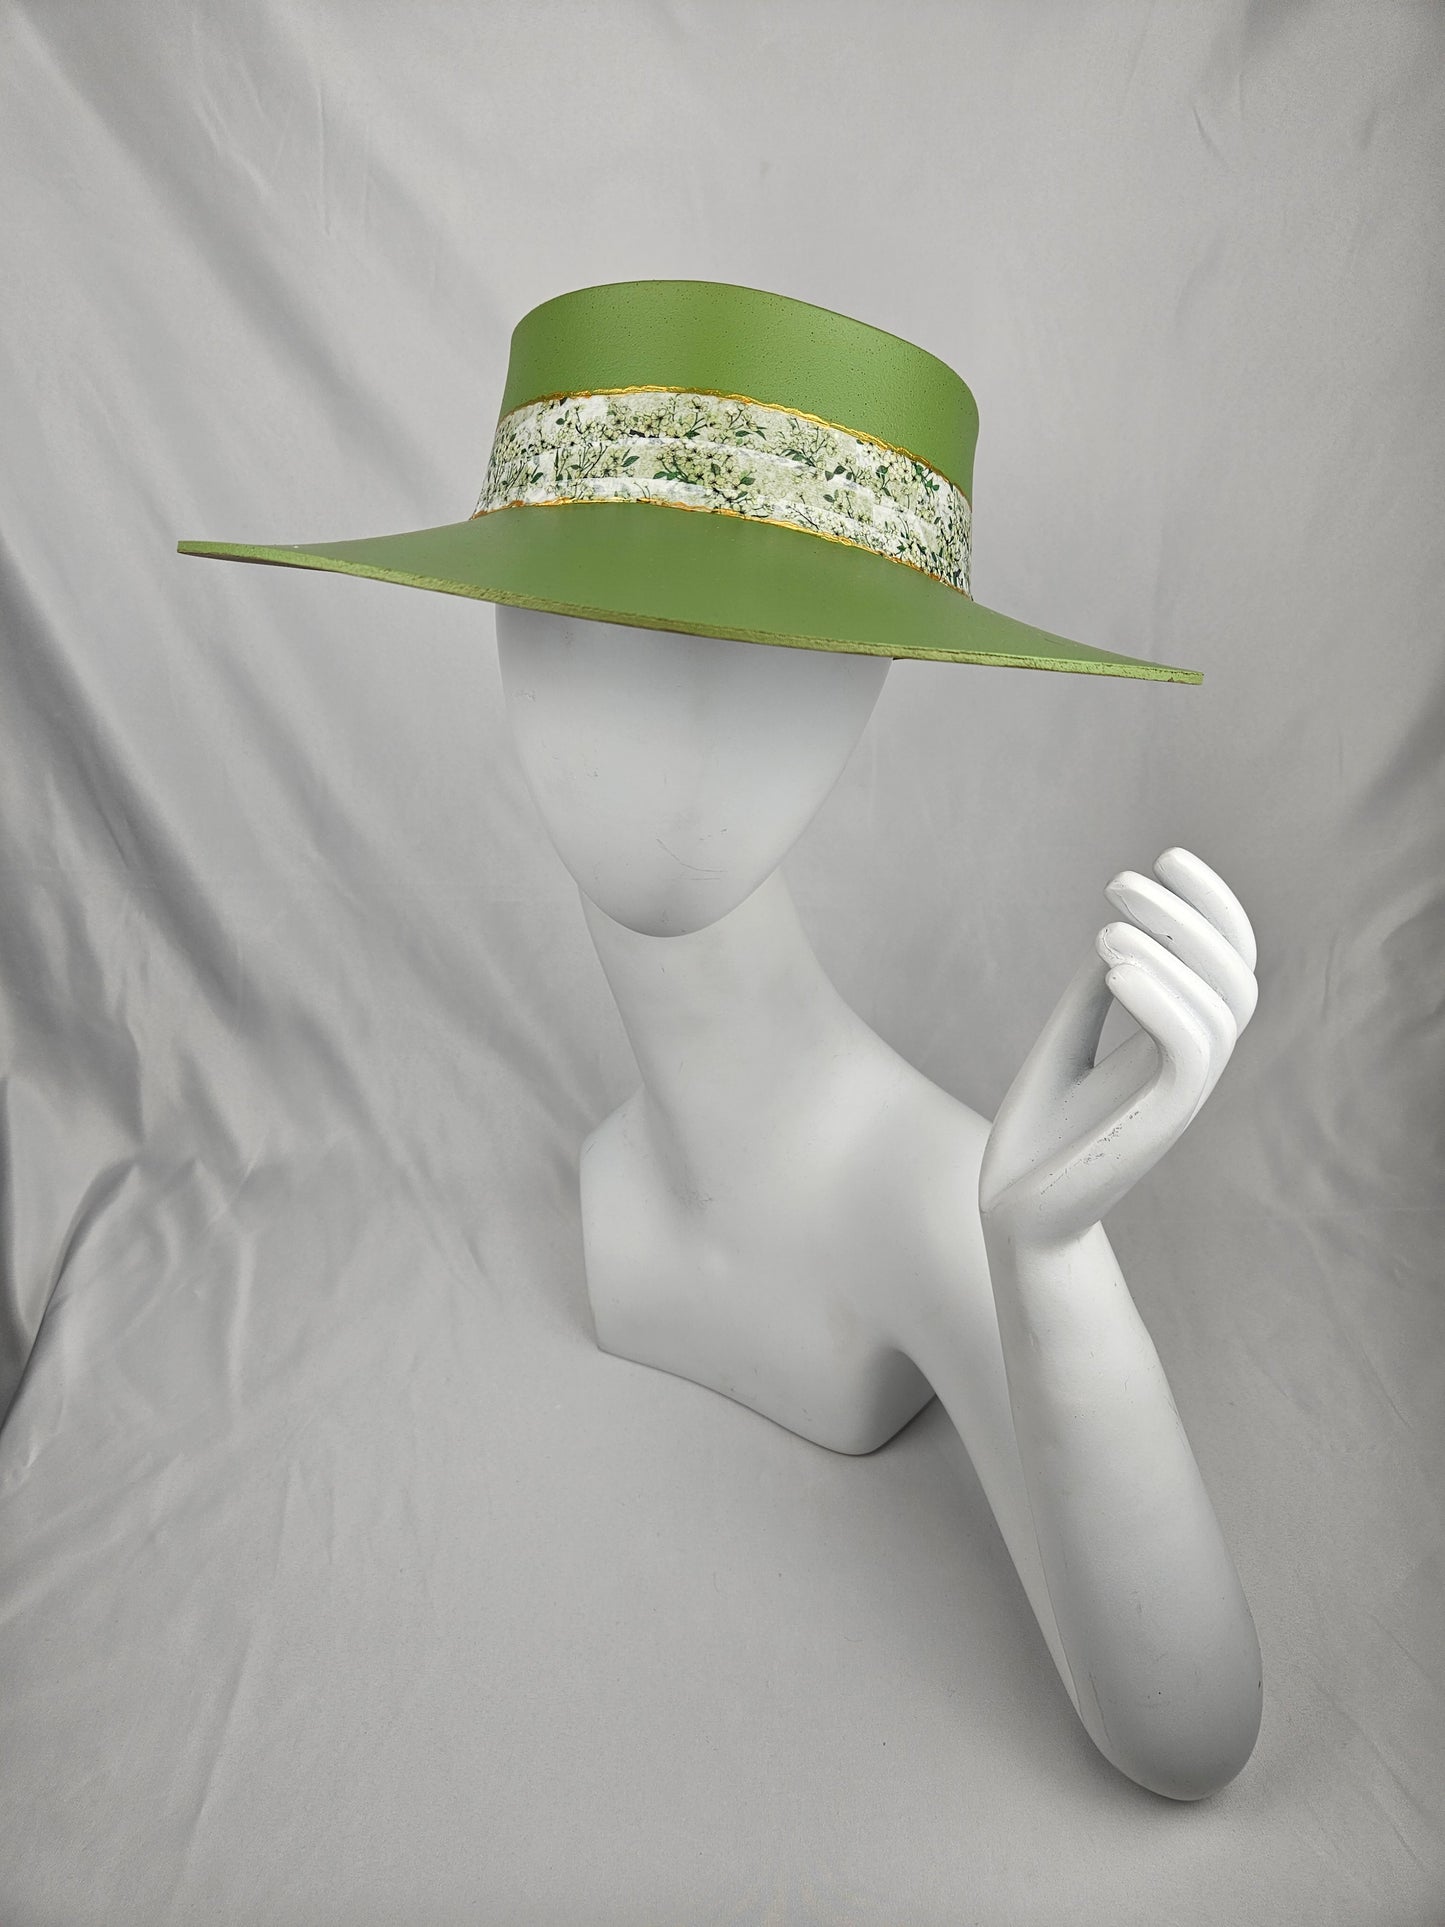 Spring/Summer Green Audrey Foam Sun Visor Hat with Bright Green Garden Band and Handpainted Floral Motif: 1950s, Derby, Garden, Golf, Pool, UV Resistant, No Headache